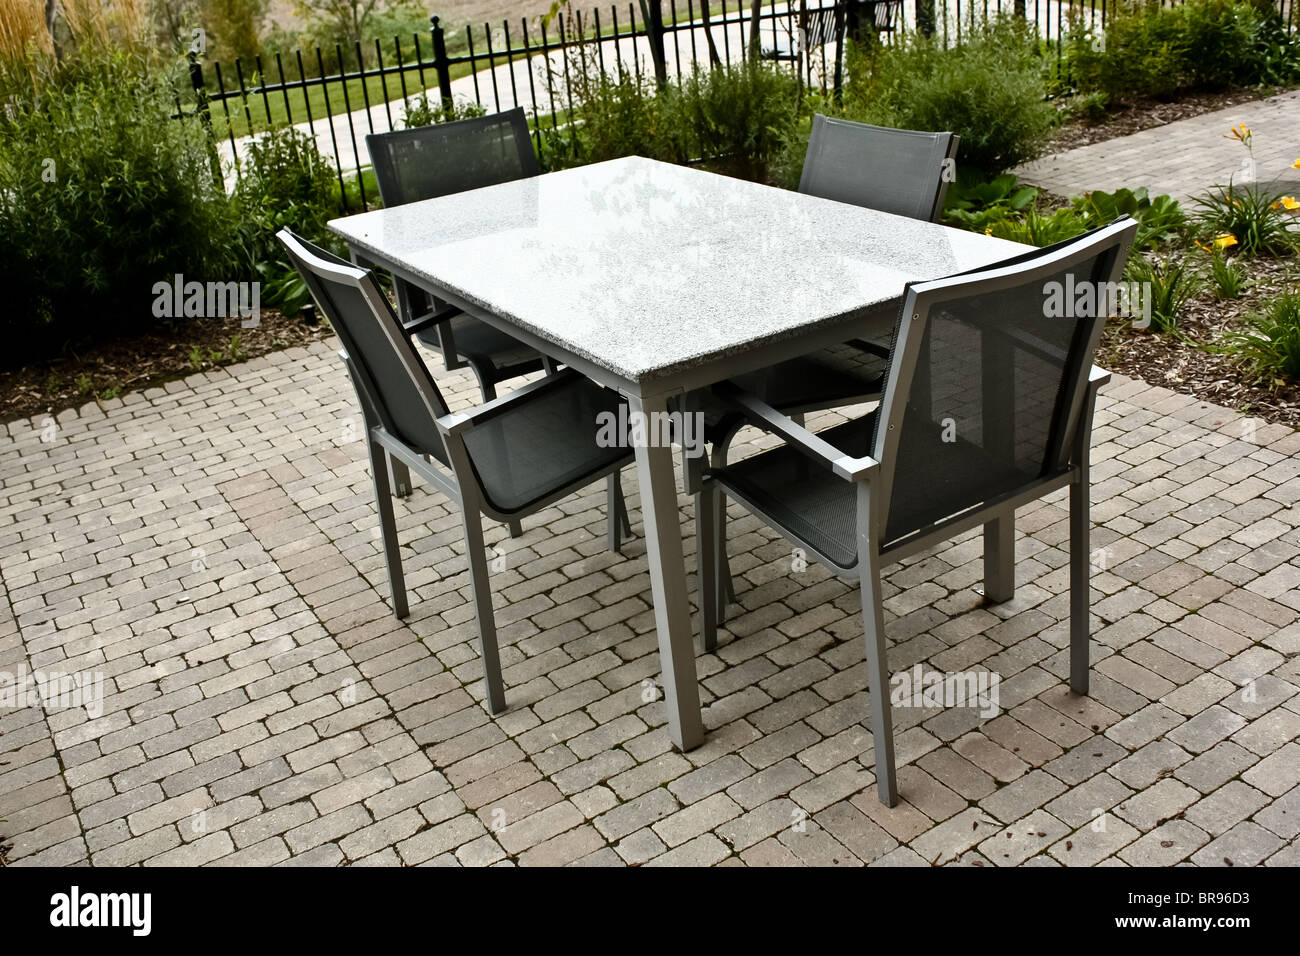 outdoor patio furniture Stock Photo